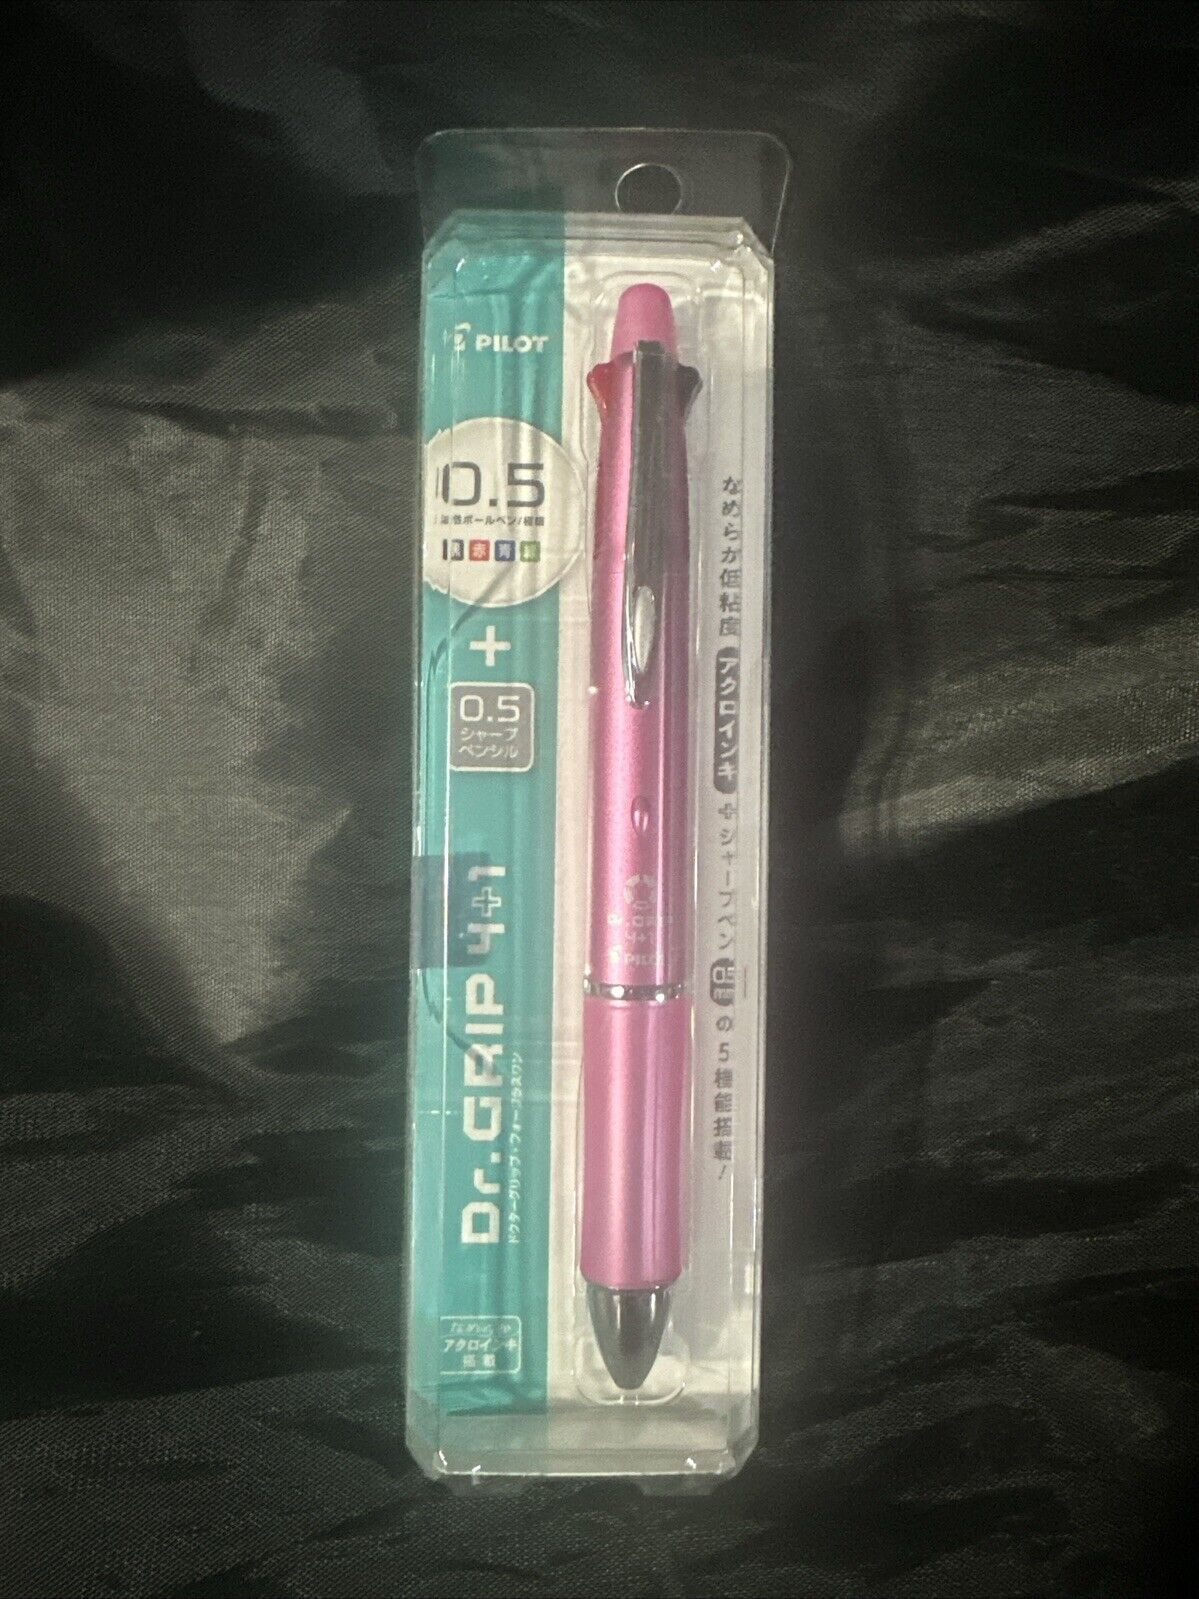 Pilot Dr. Grip 4+1 4 Color 0.5 mm Ballpoint Pen - Series I - Shell Pink